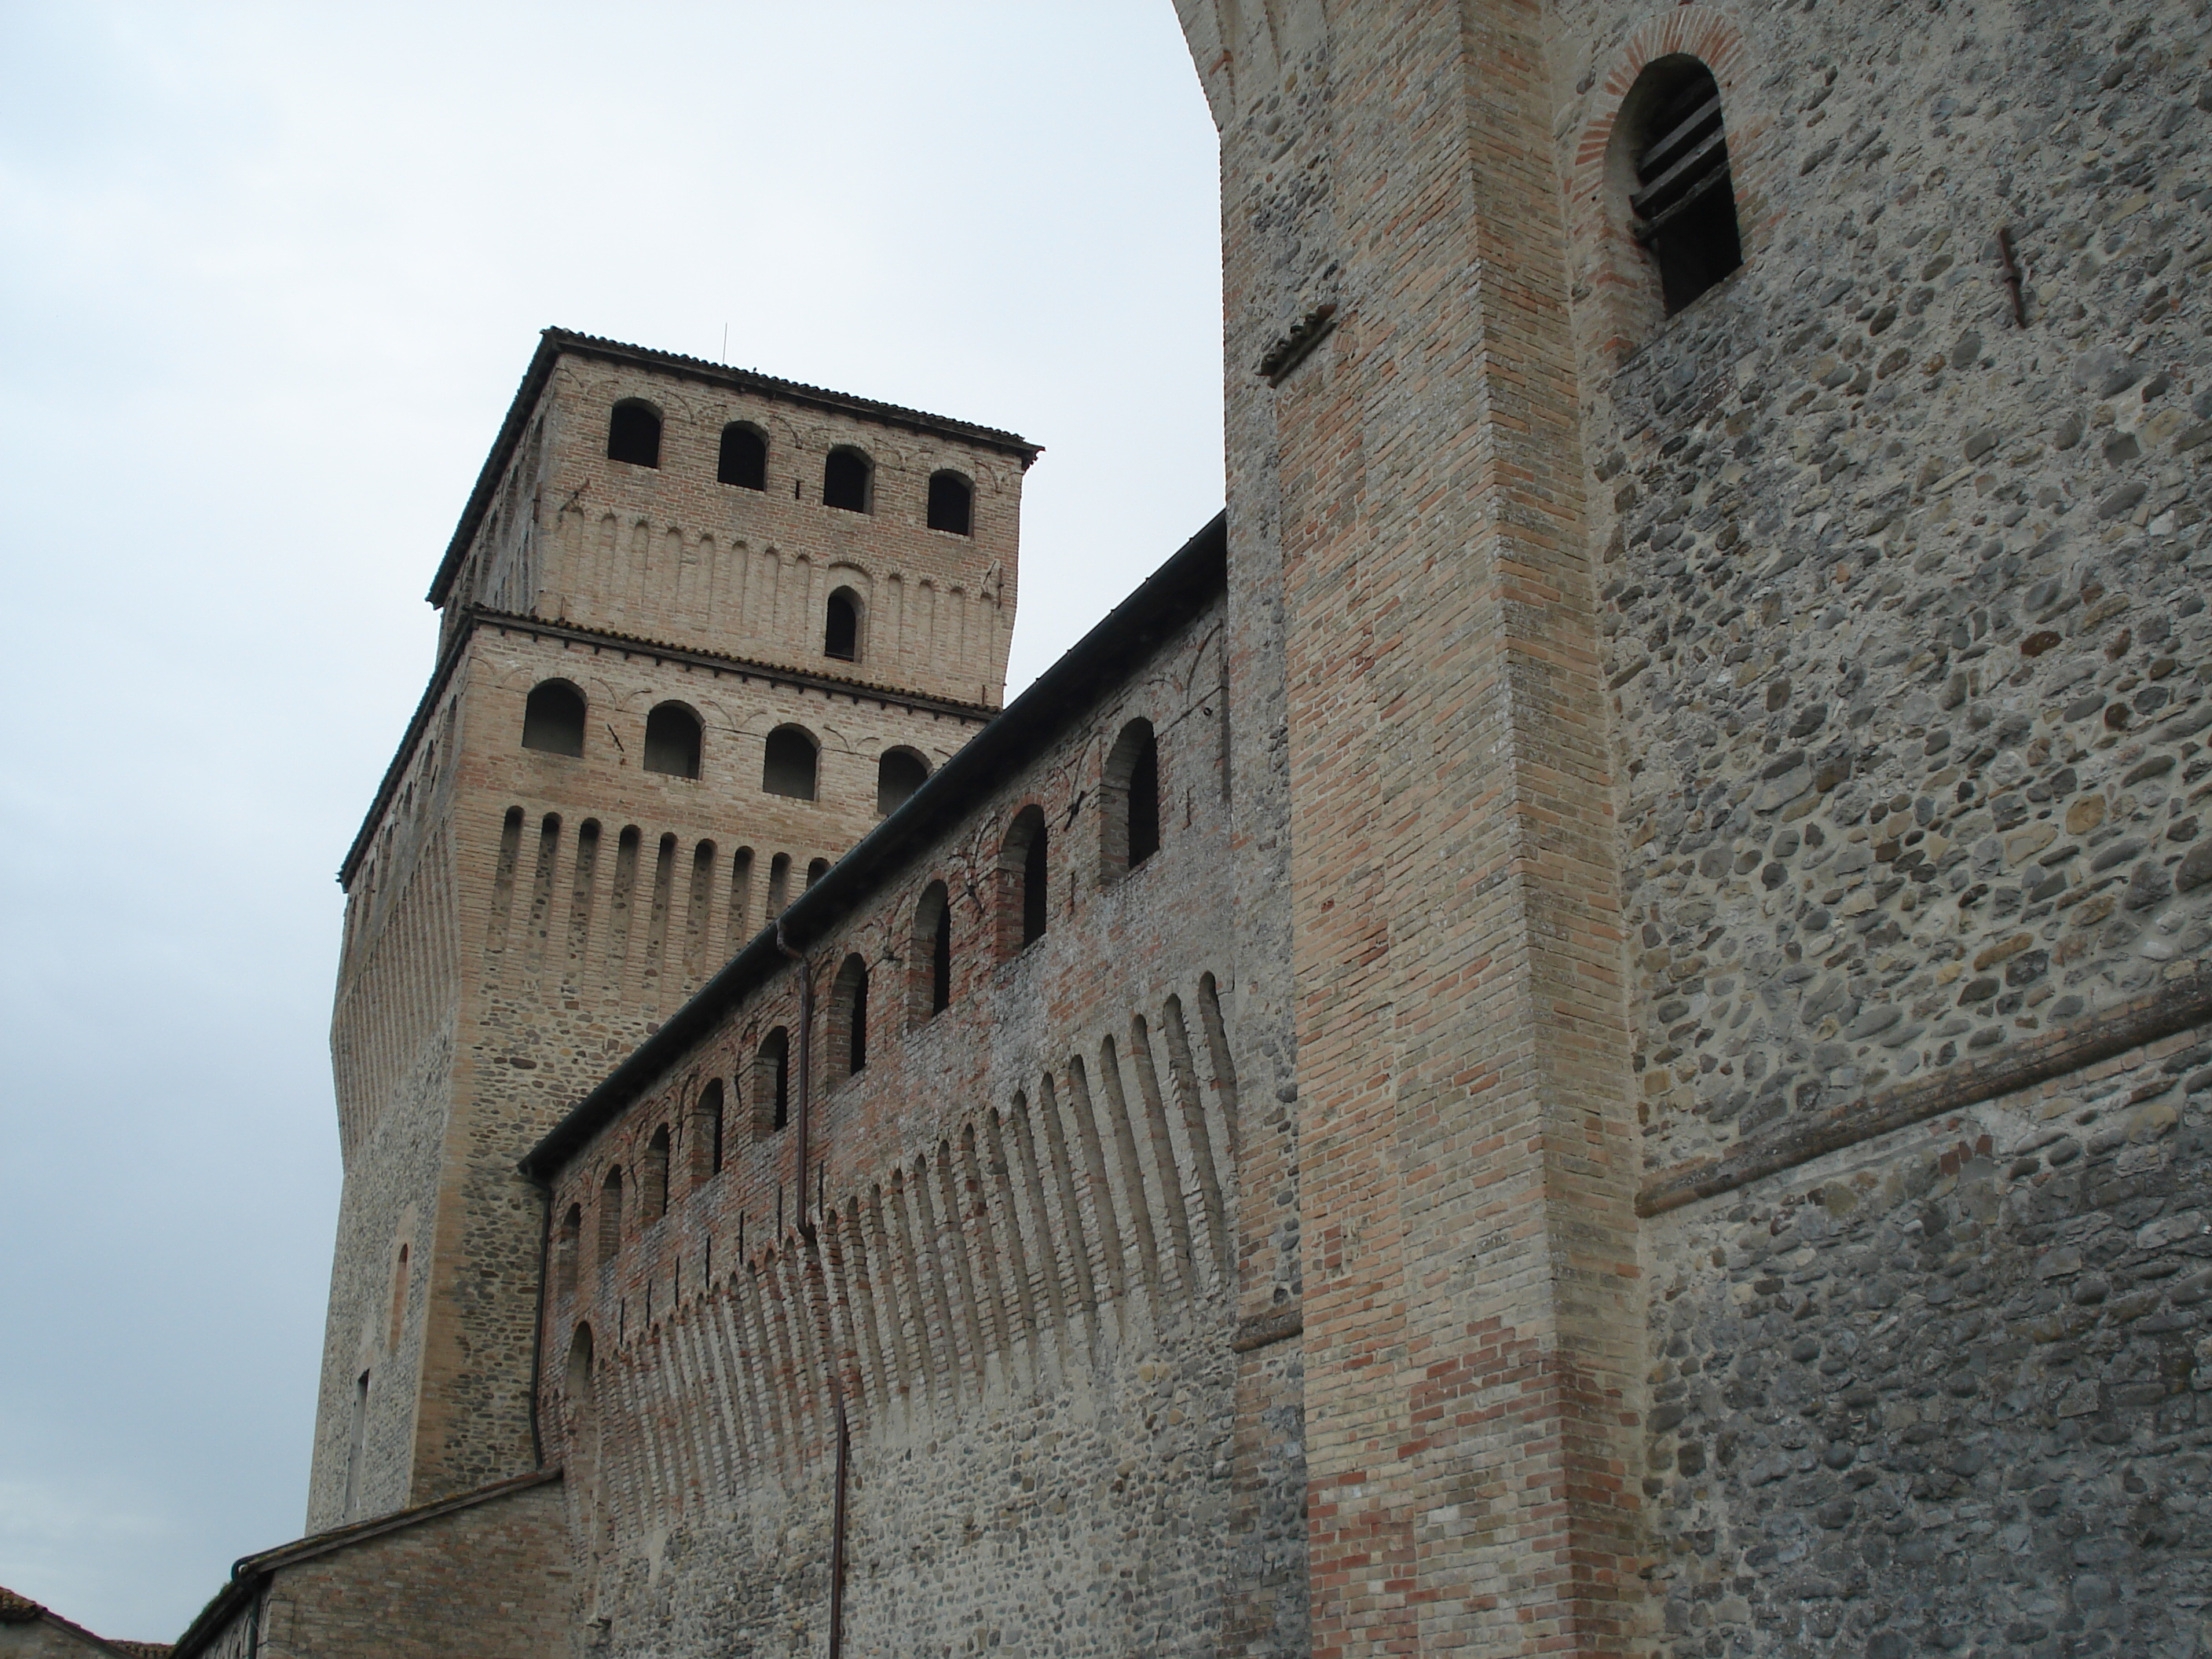 photo: https://upload.wikimedia.org/wikipedia/commons/4/45/Castello_di_Torrechiara_02.JPG